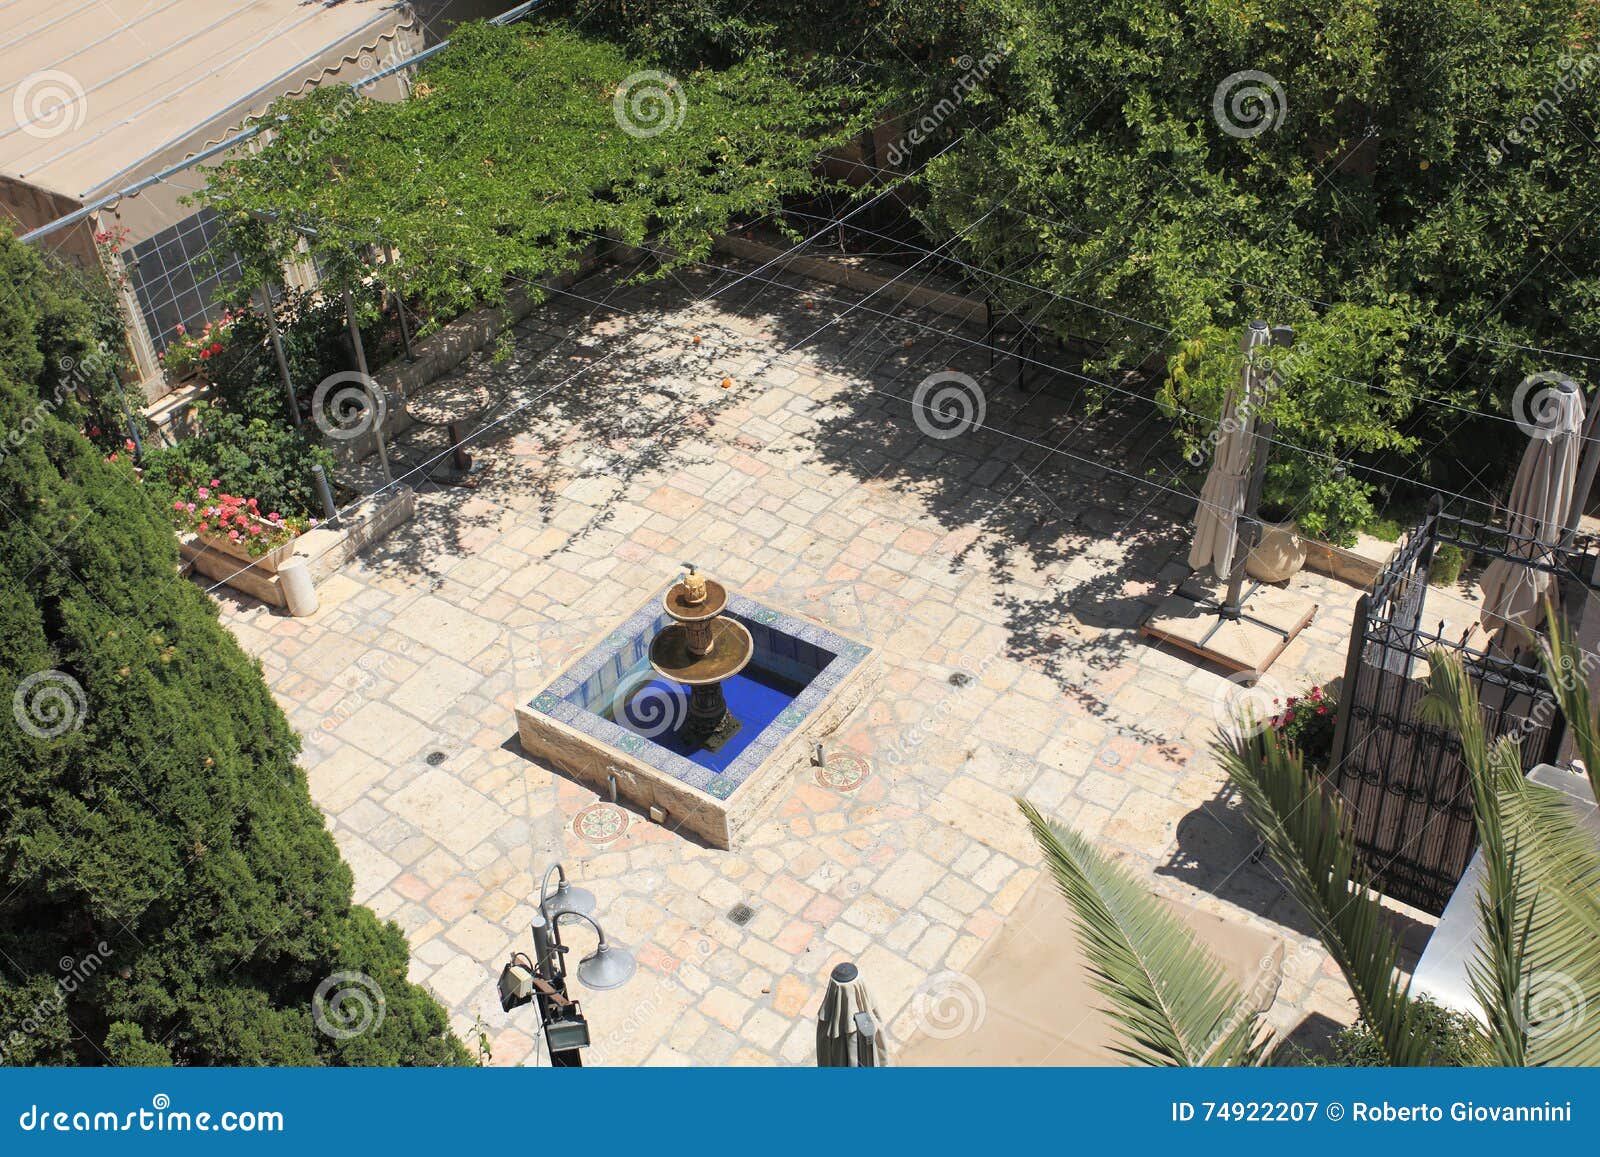 https://thumbs.dreamstime.com/z/green-courtyard-fountain-jerusalem-view-elegant-trees-old-city-israel-ramparts-walk-walls-74922207.jpg